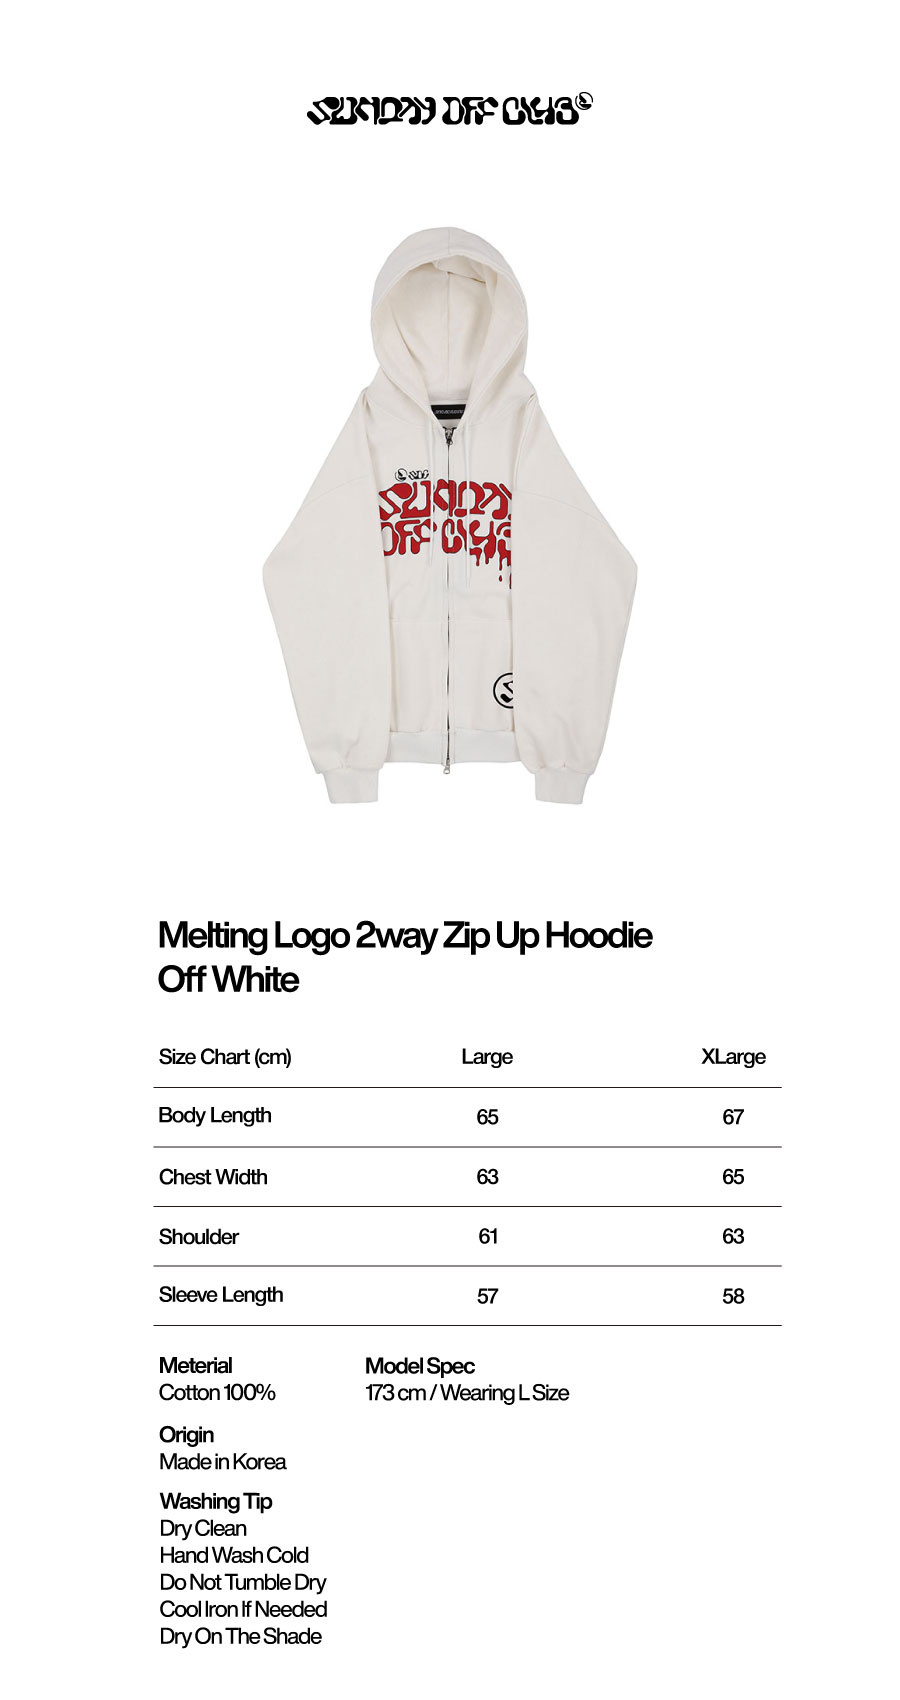 [SUNDAYOFFCLUB] Melting logo 2way zip up hoodie - Off White